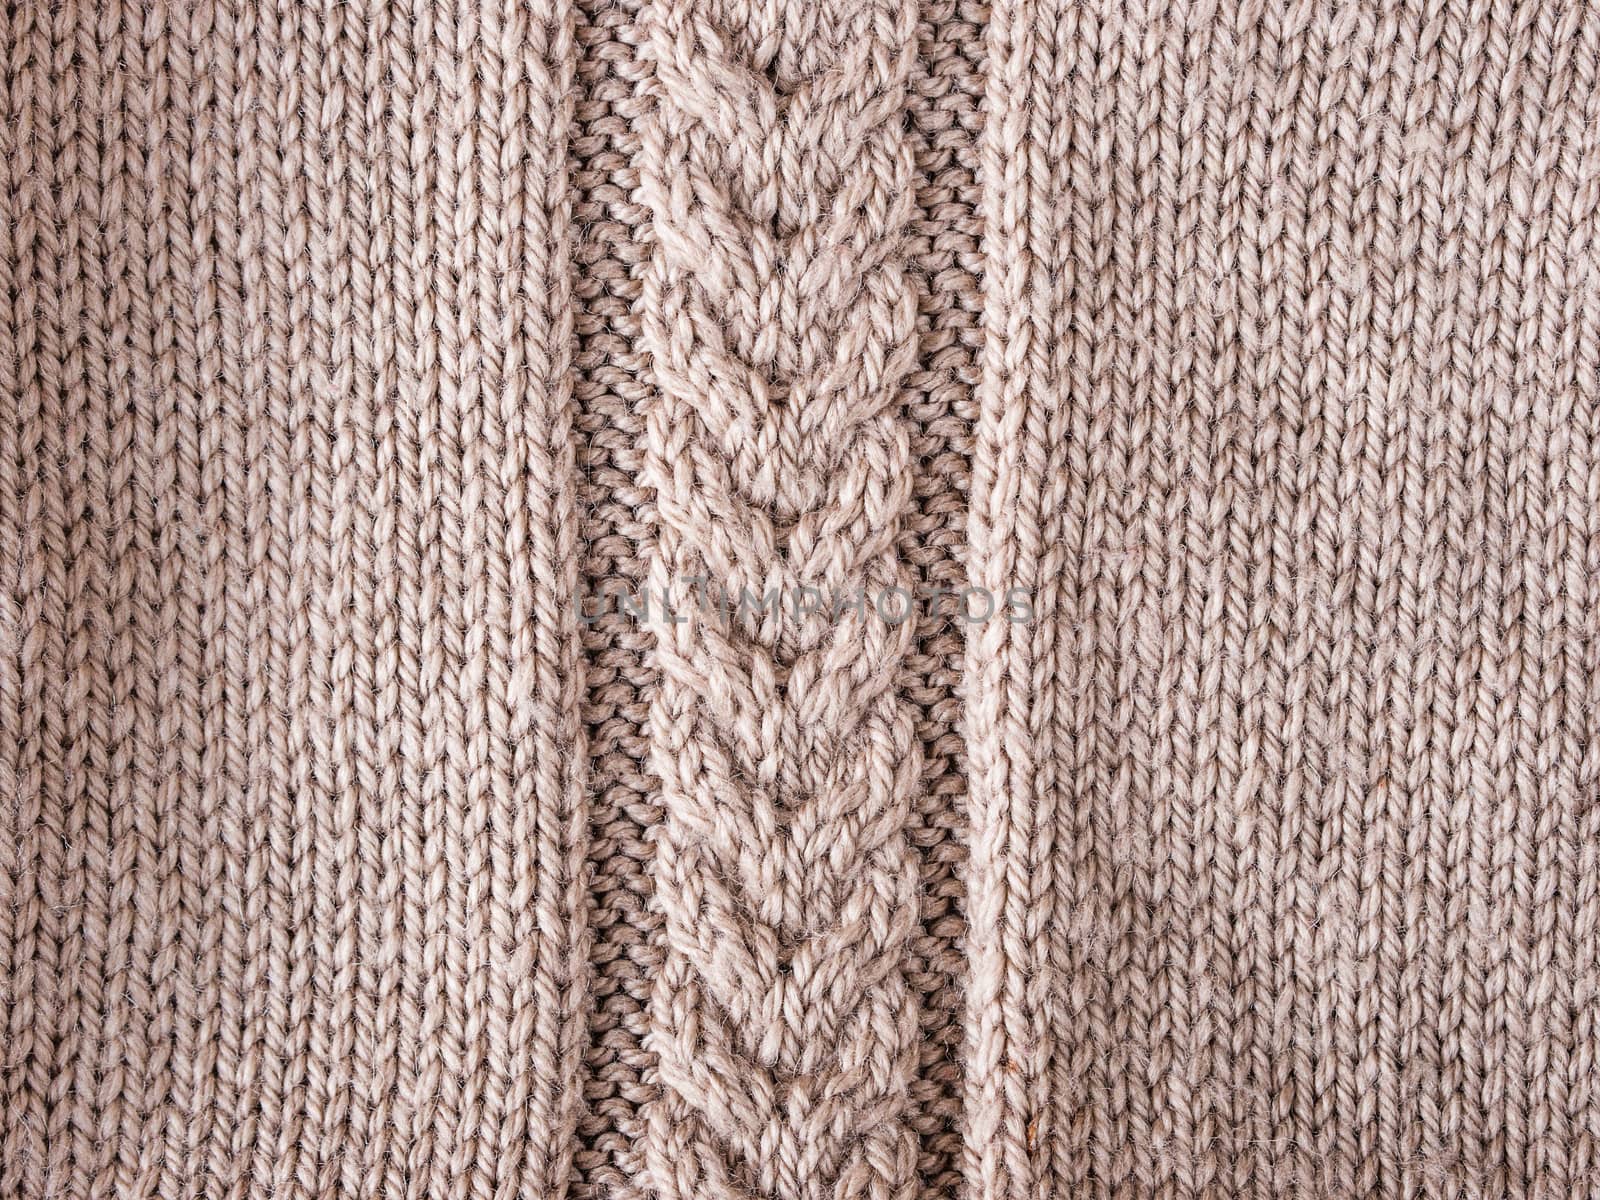 braid on knit sweater by fascinadora